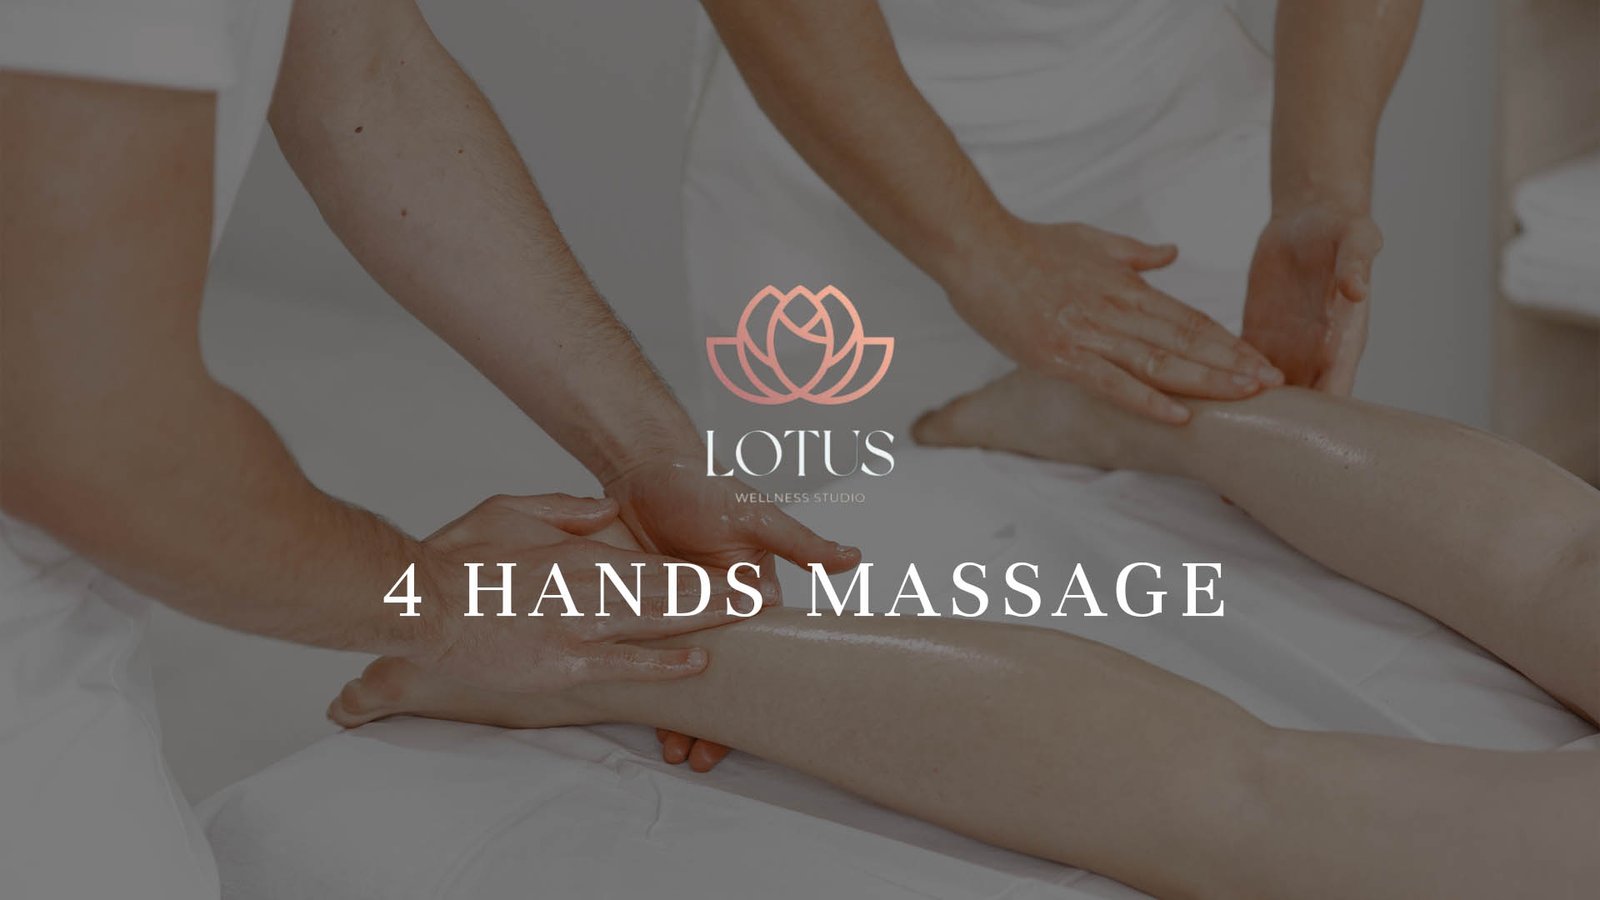 1. 4 Hands Massage